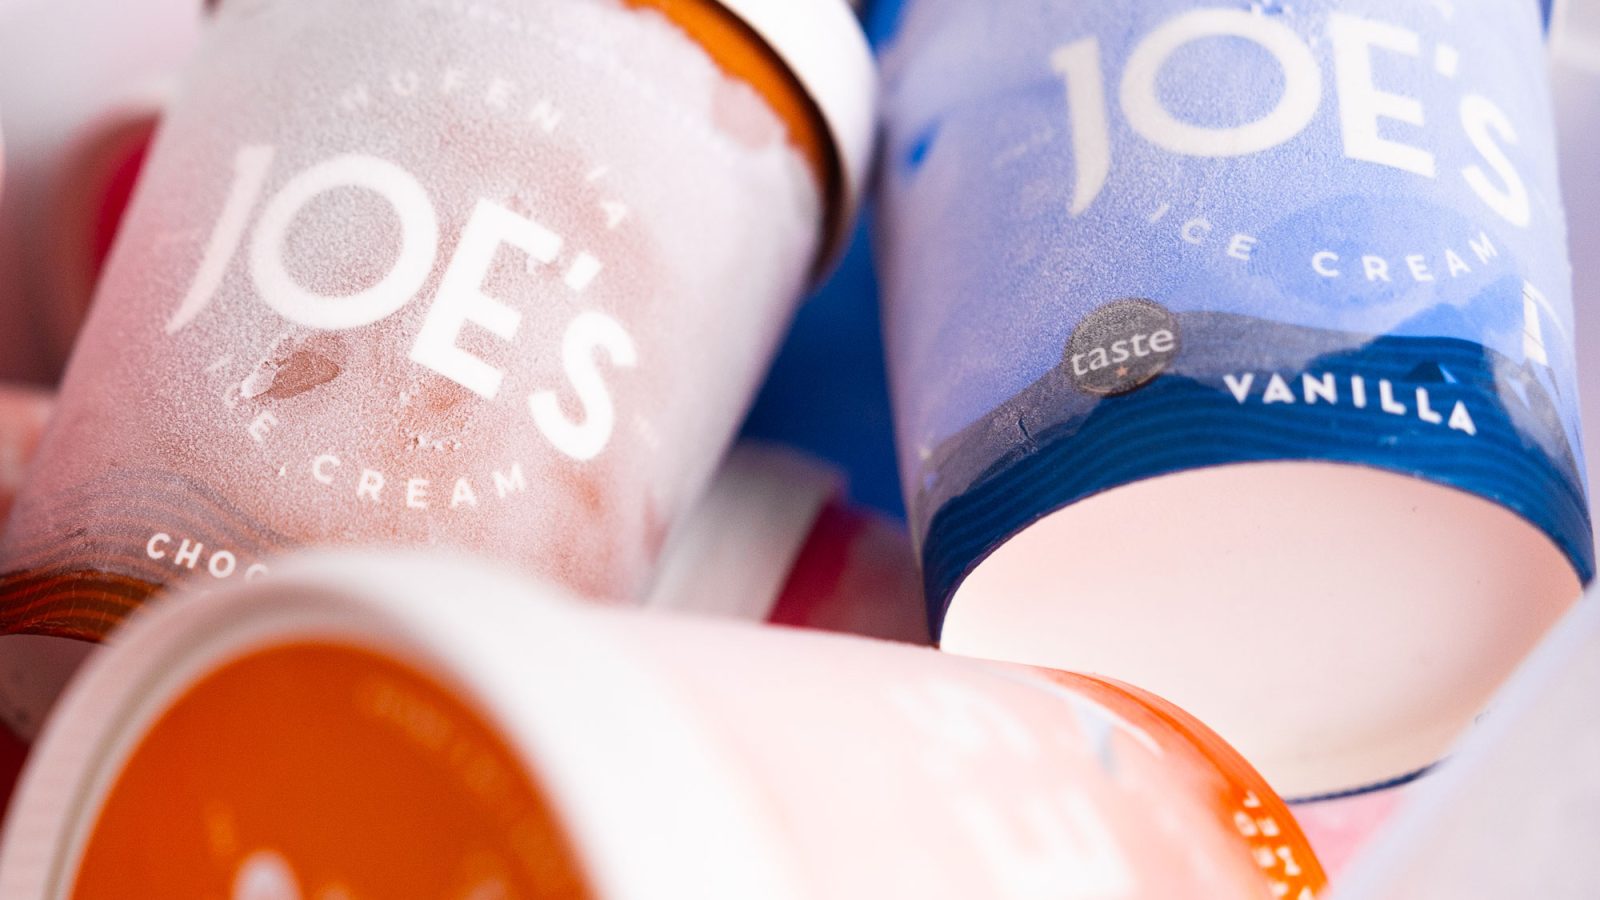 Joe's Ice Cream - Packaging Design - Group - Icy